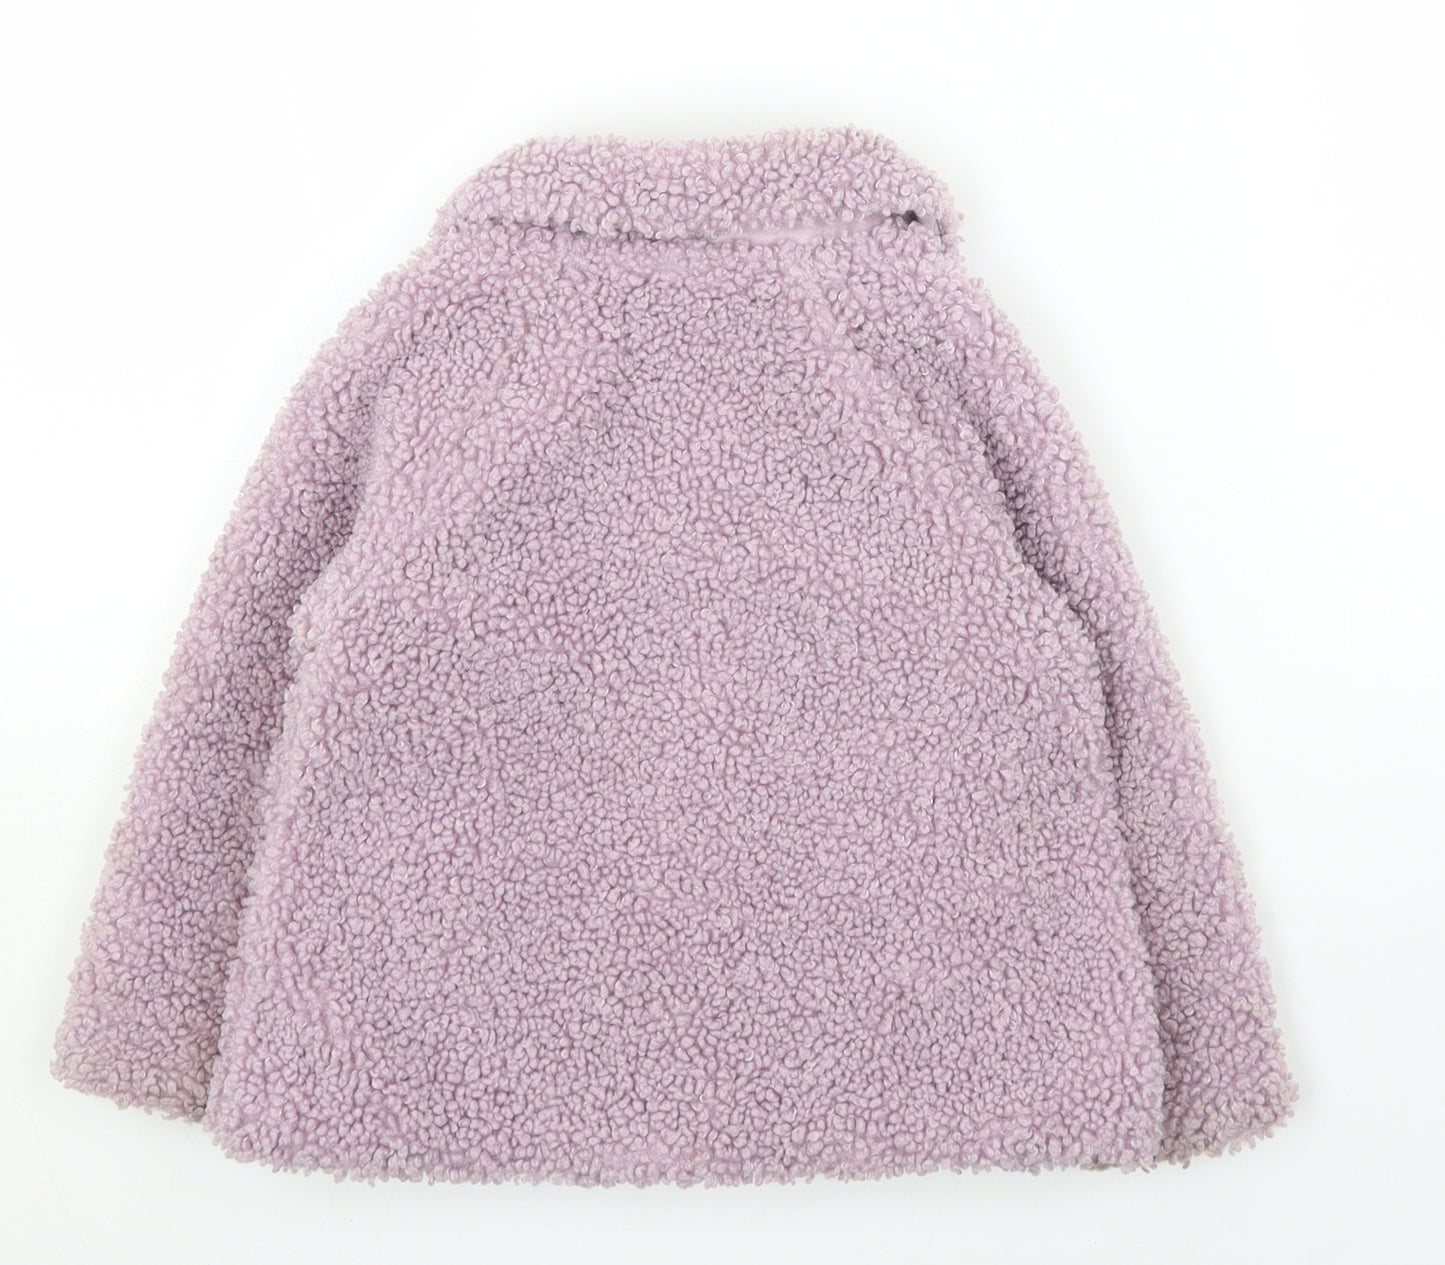 TU Girls Purple Pea Coat Coat Size 2-3 Years Button